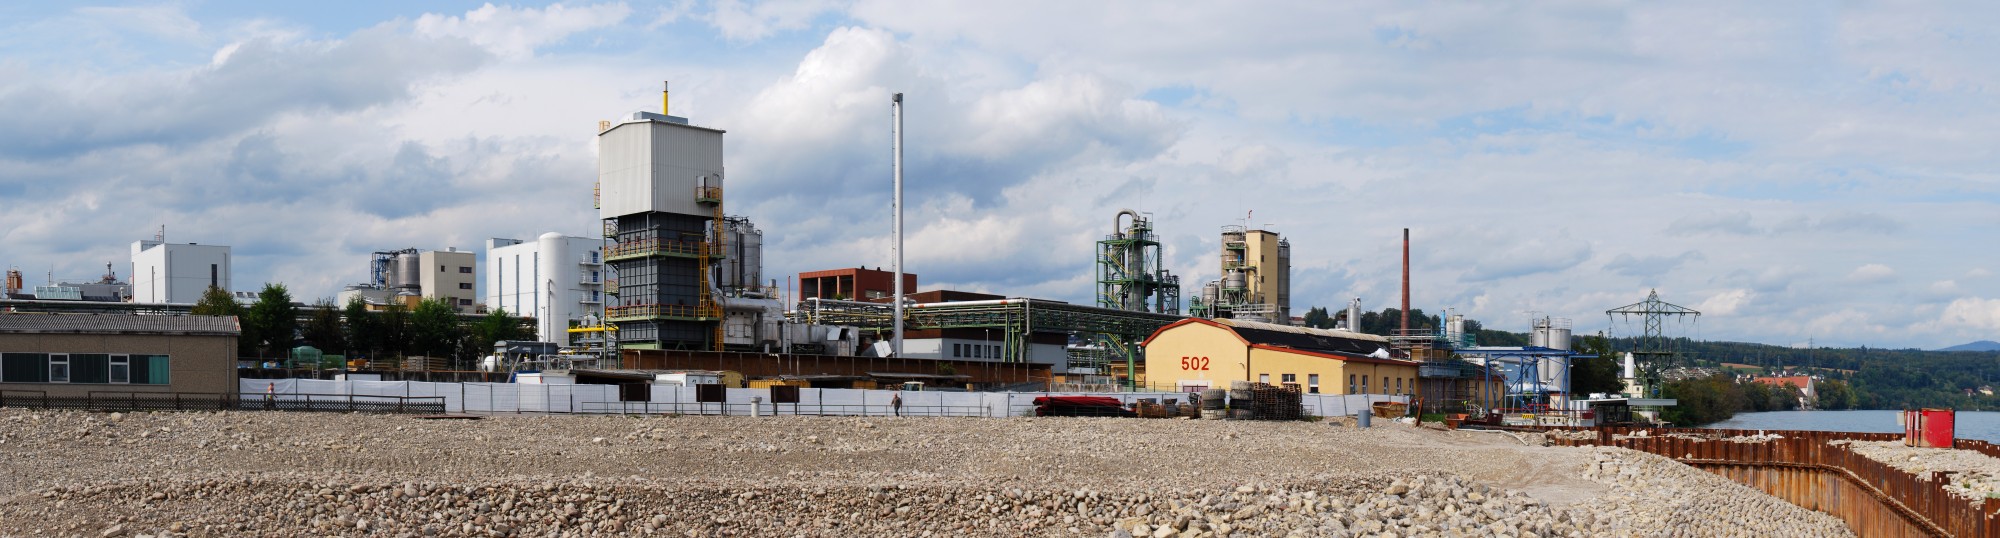 Fabrik Rheinfelden Panorama